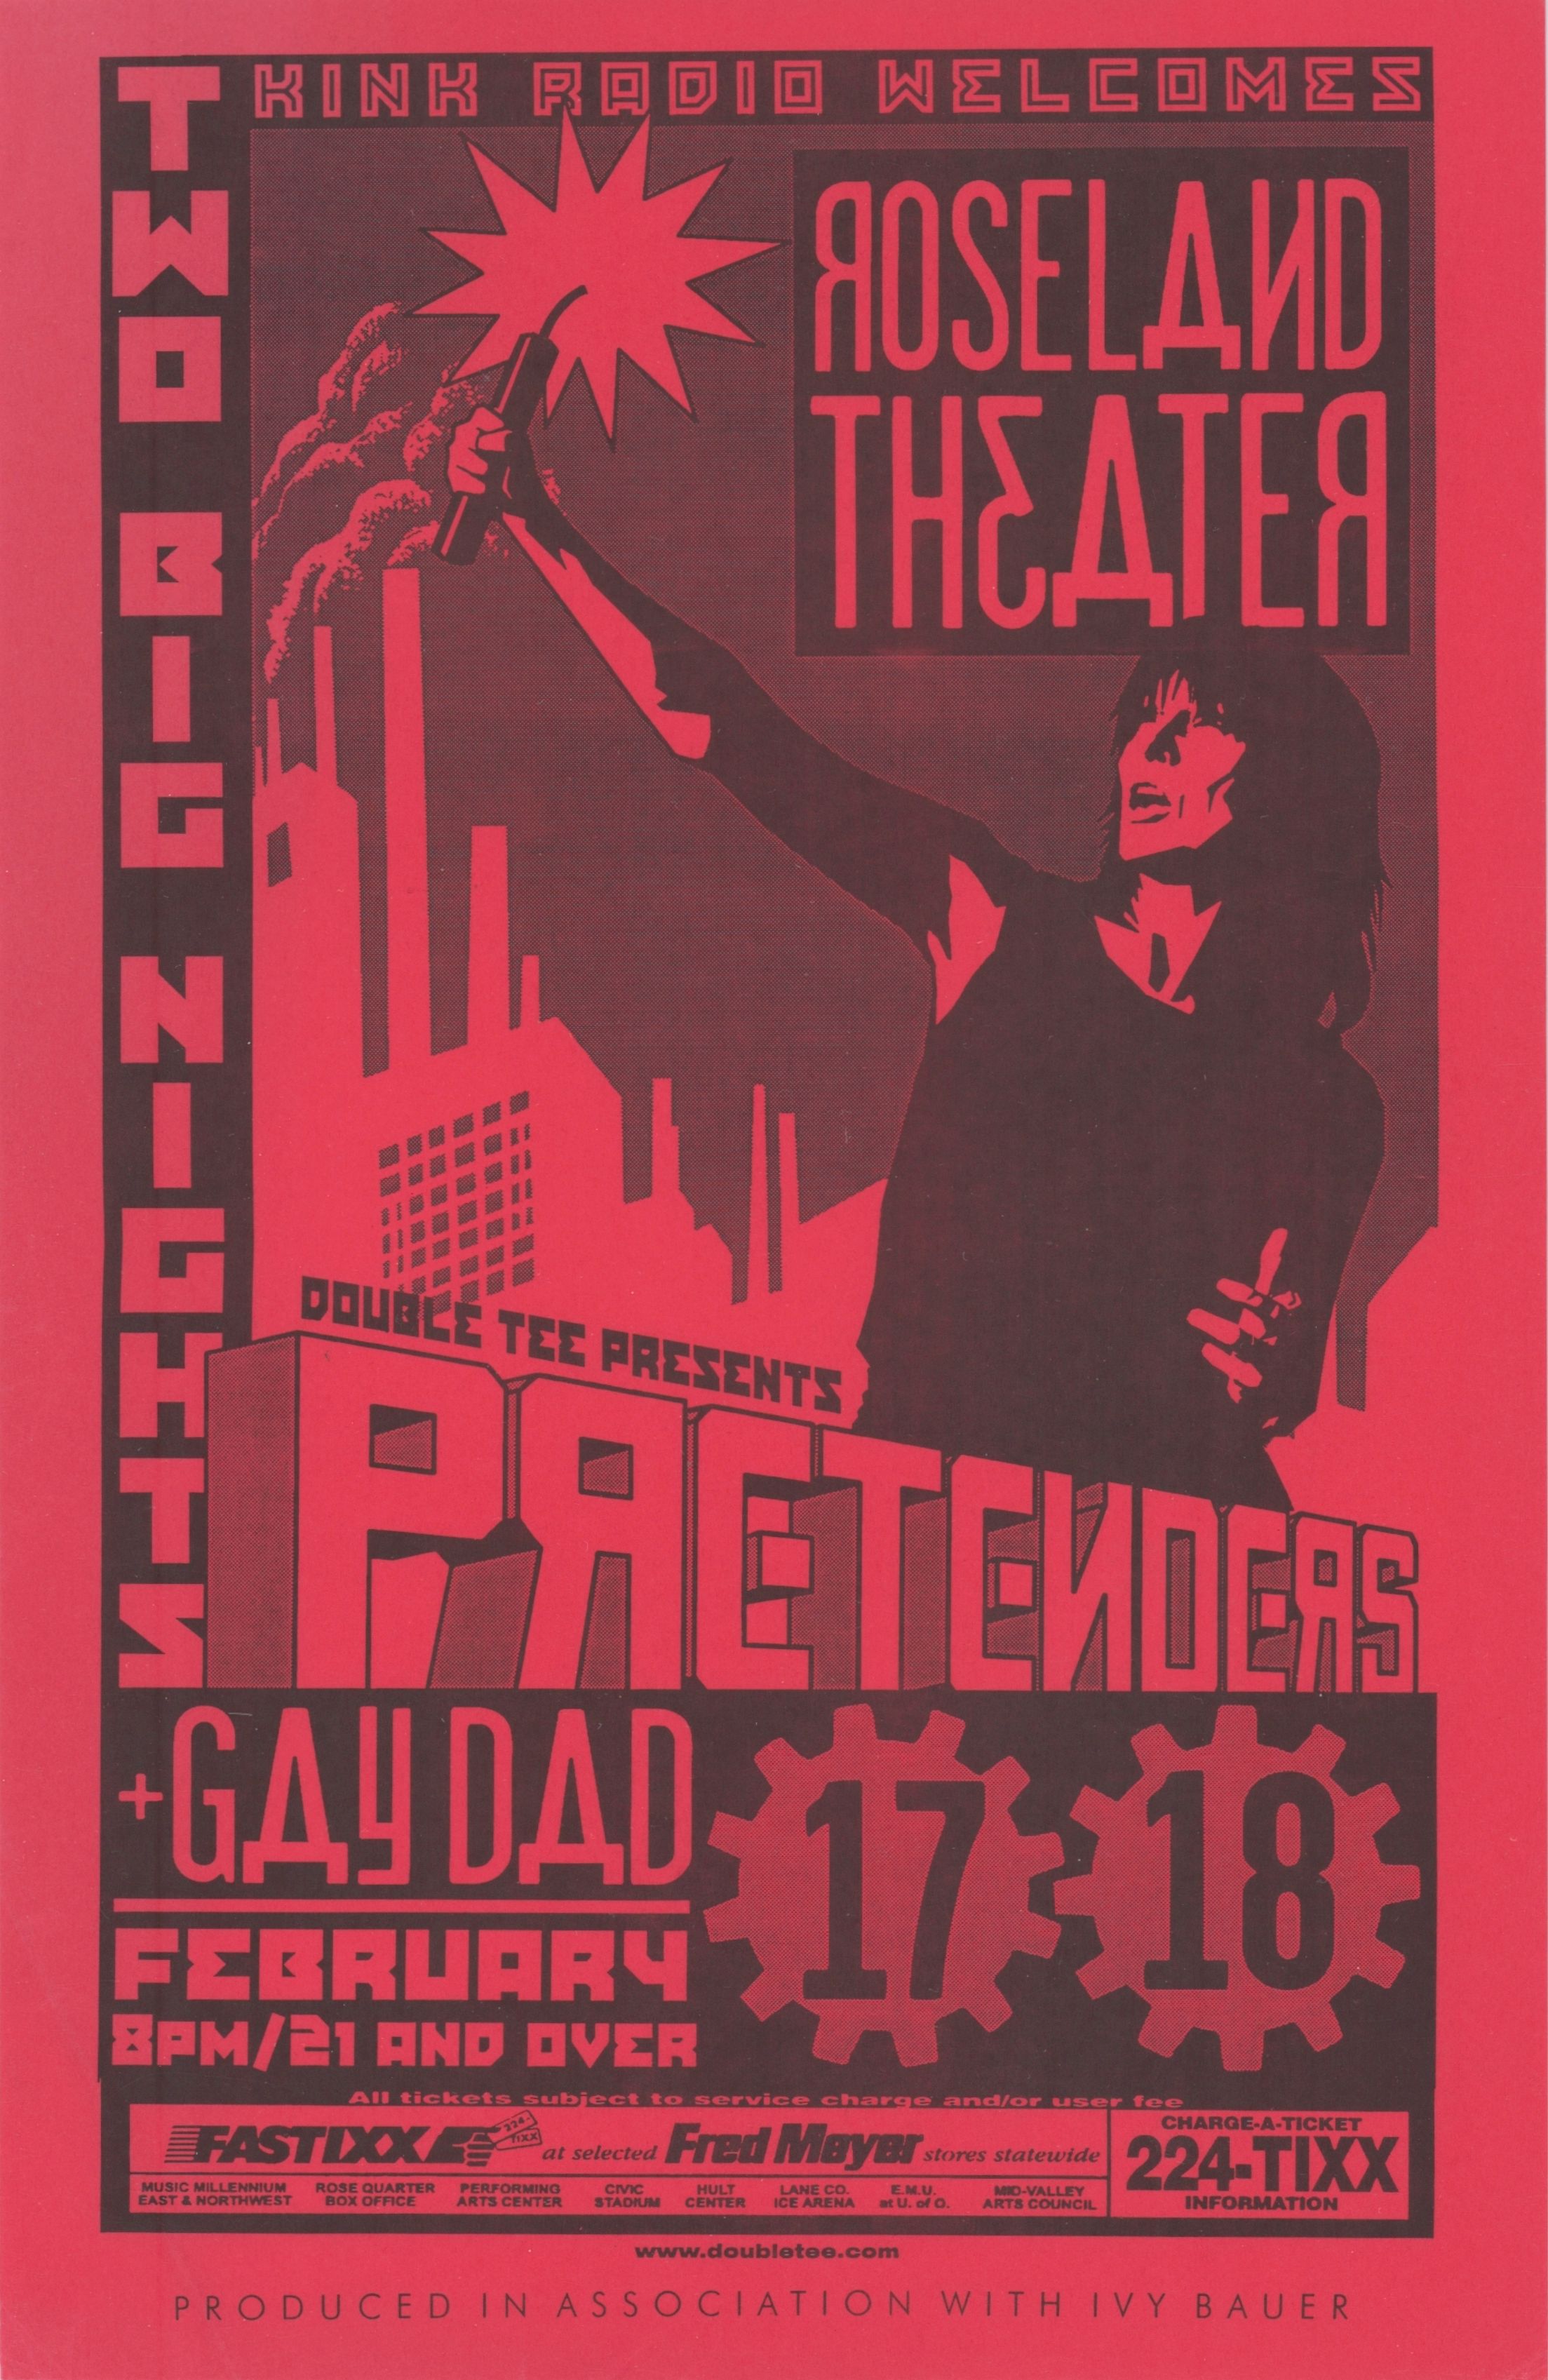 MXP-225.1 Pretenders Roseland Theater 1999 Concert Poster